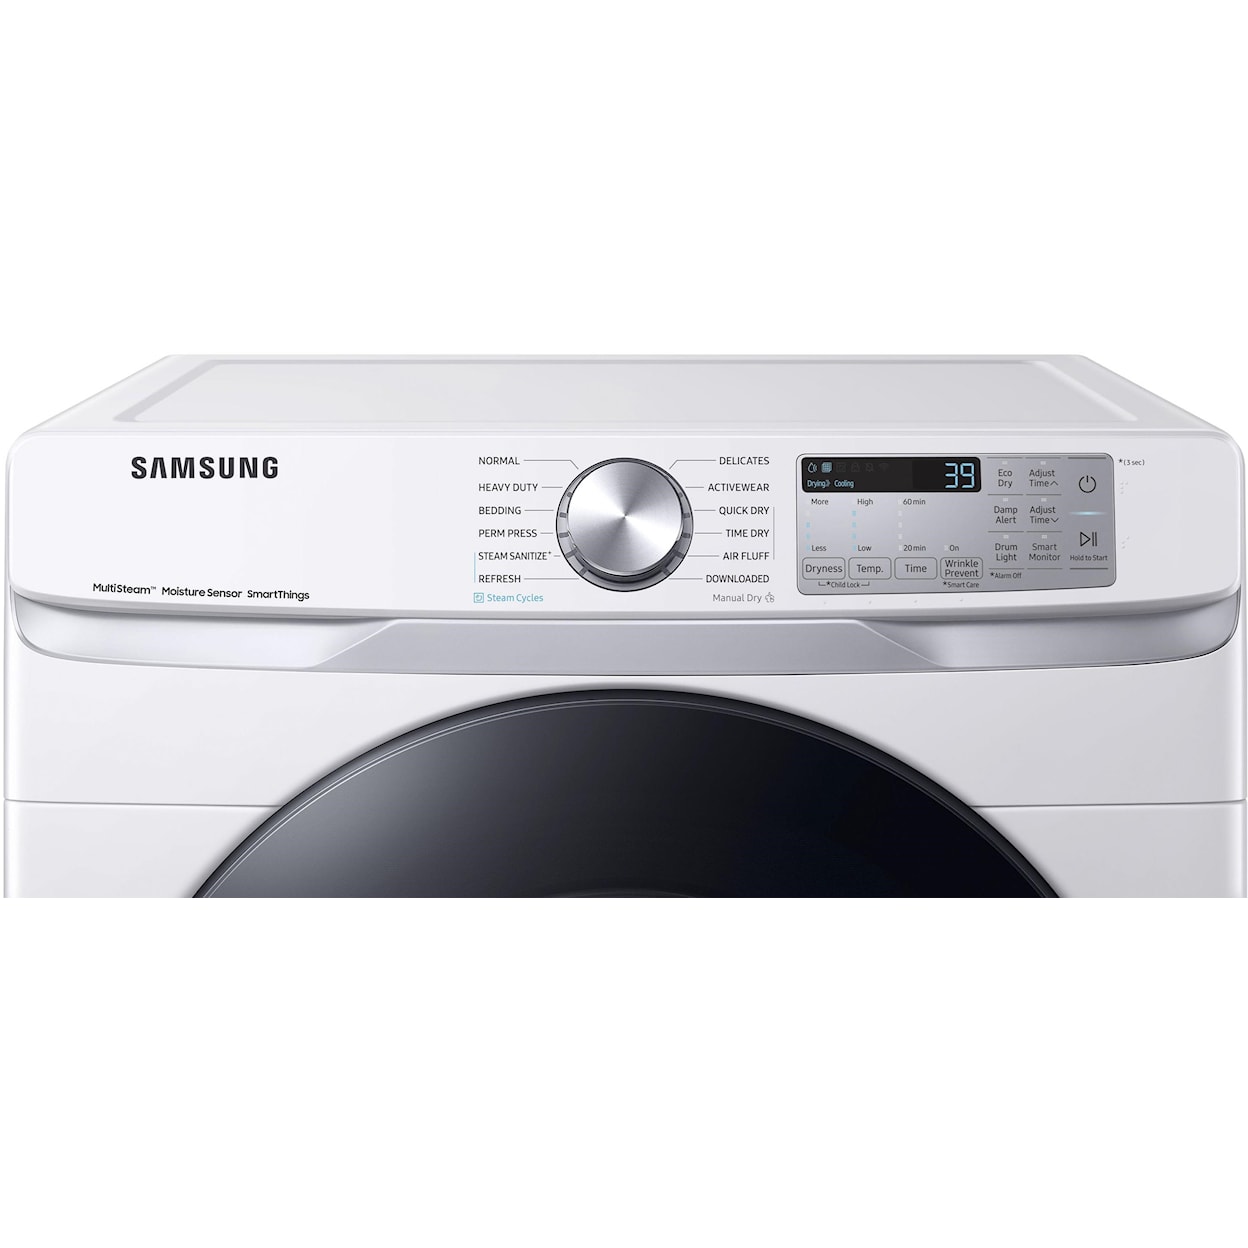 Samsung Appliances Dryers- Samsung 7.5 cu. ft. Smart Electric Dryer